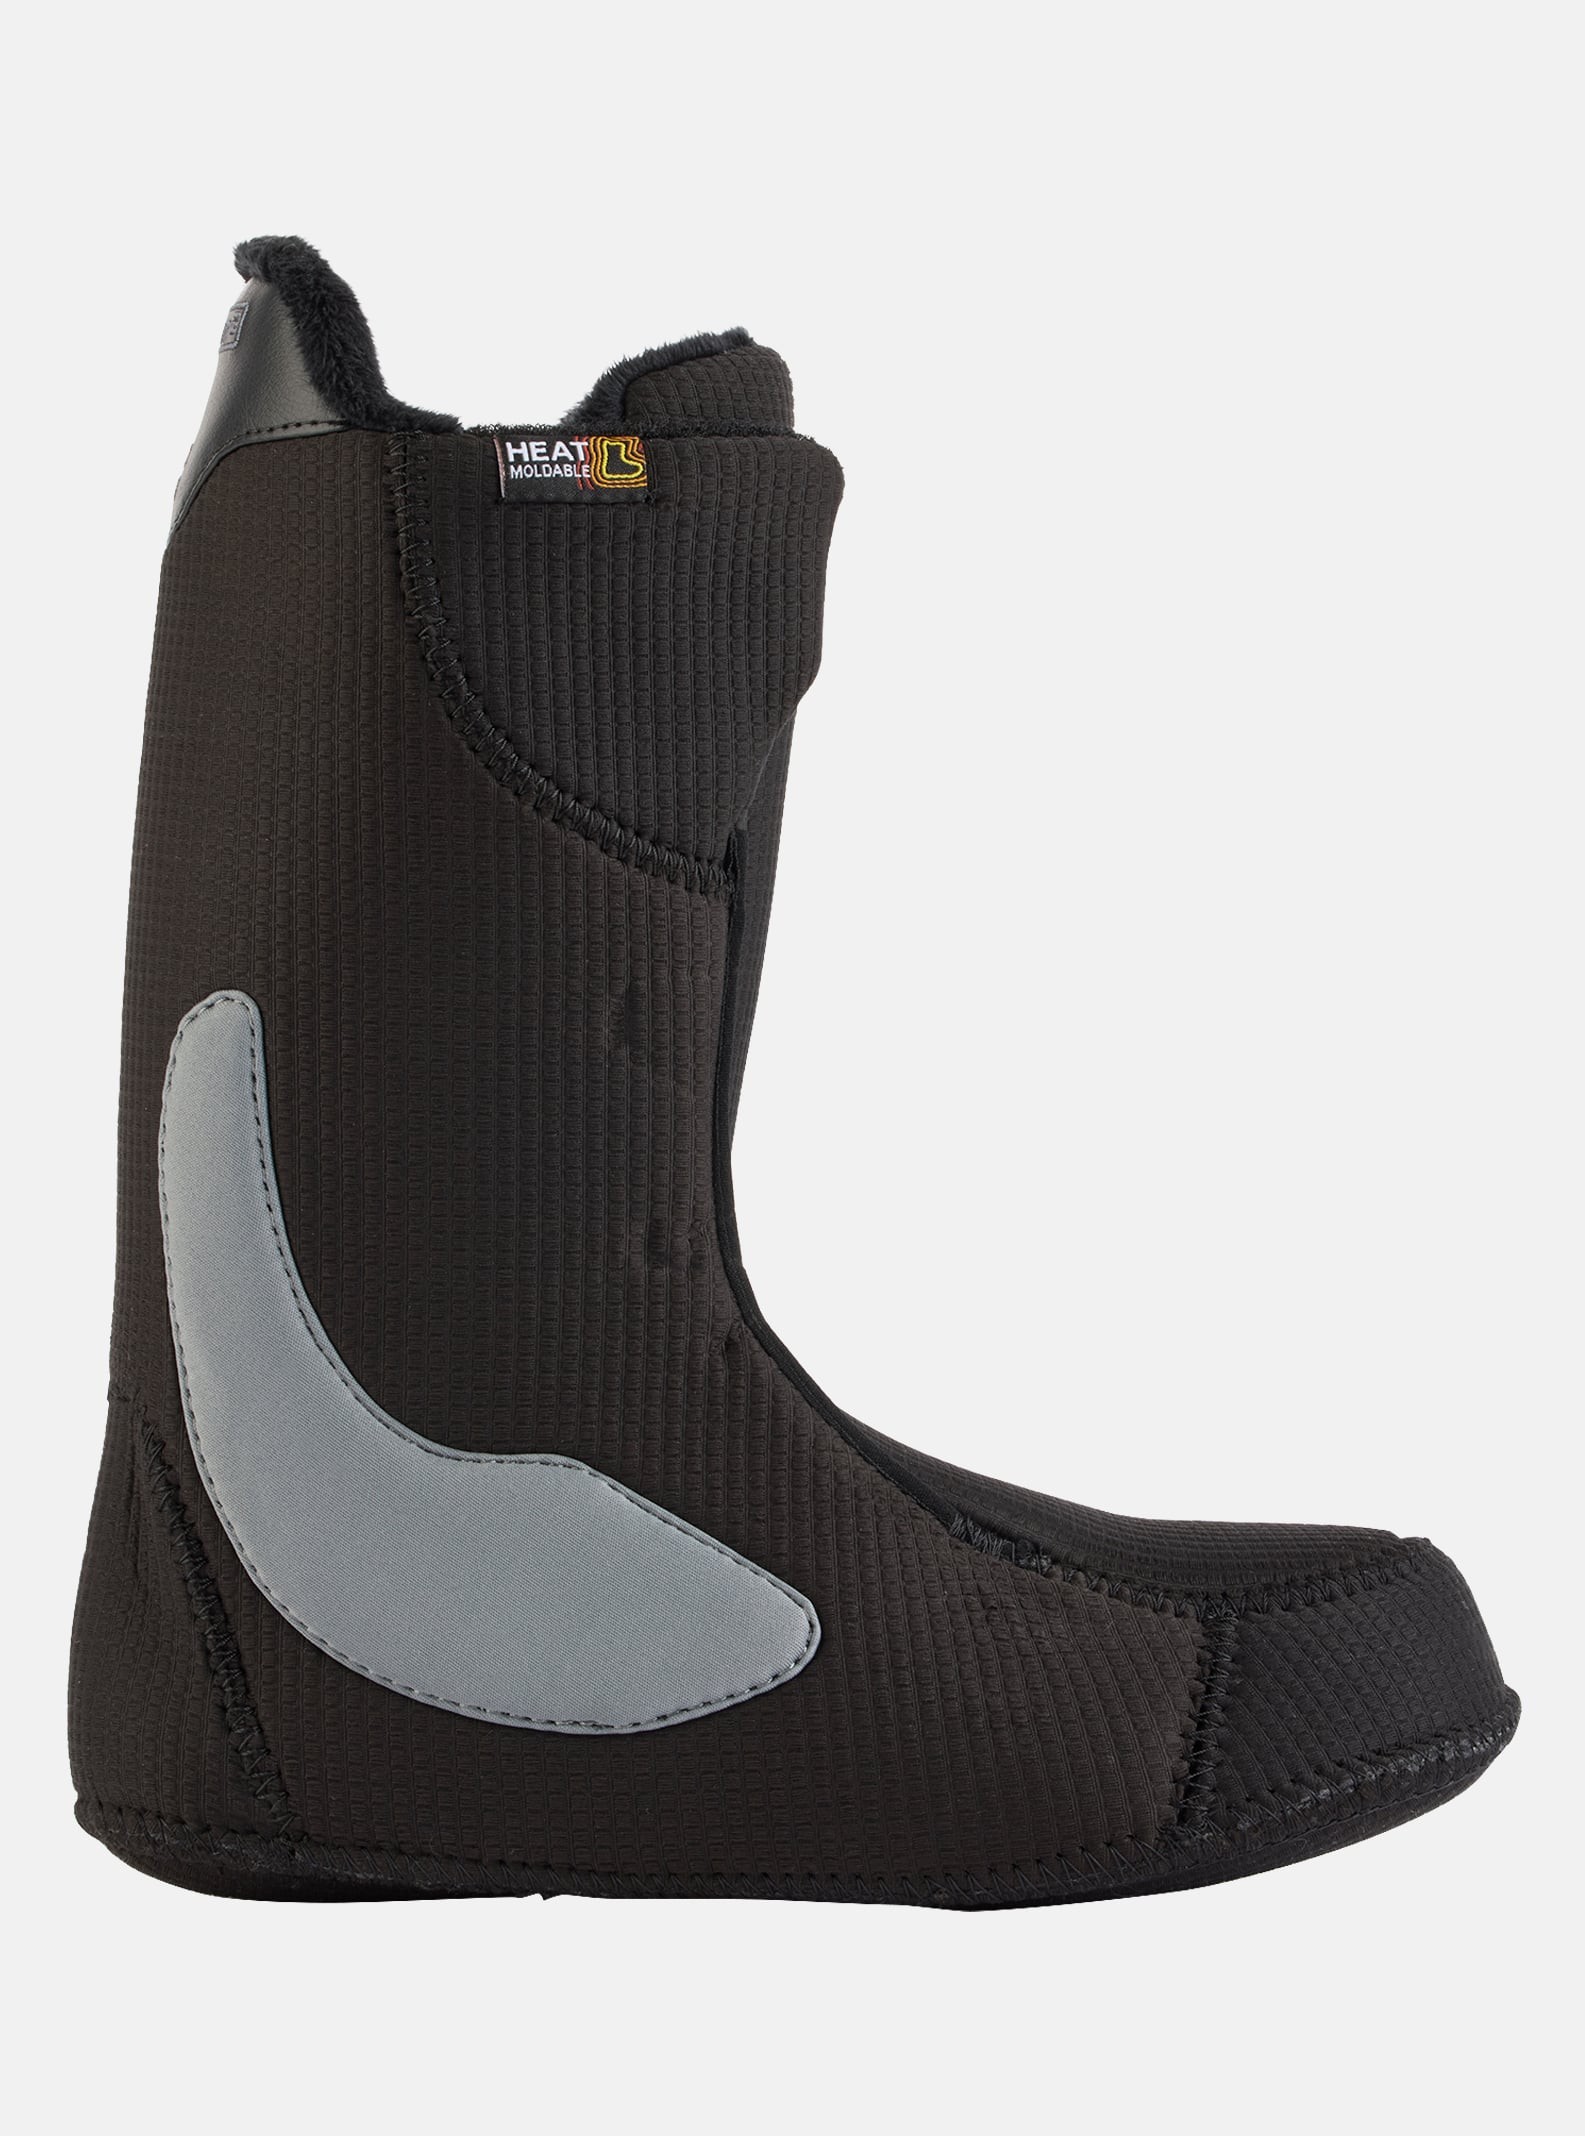 Men's Ruler BOA® Snowboard Boots (Wide)